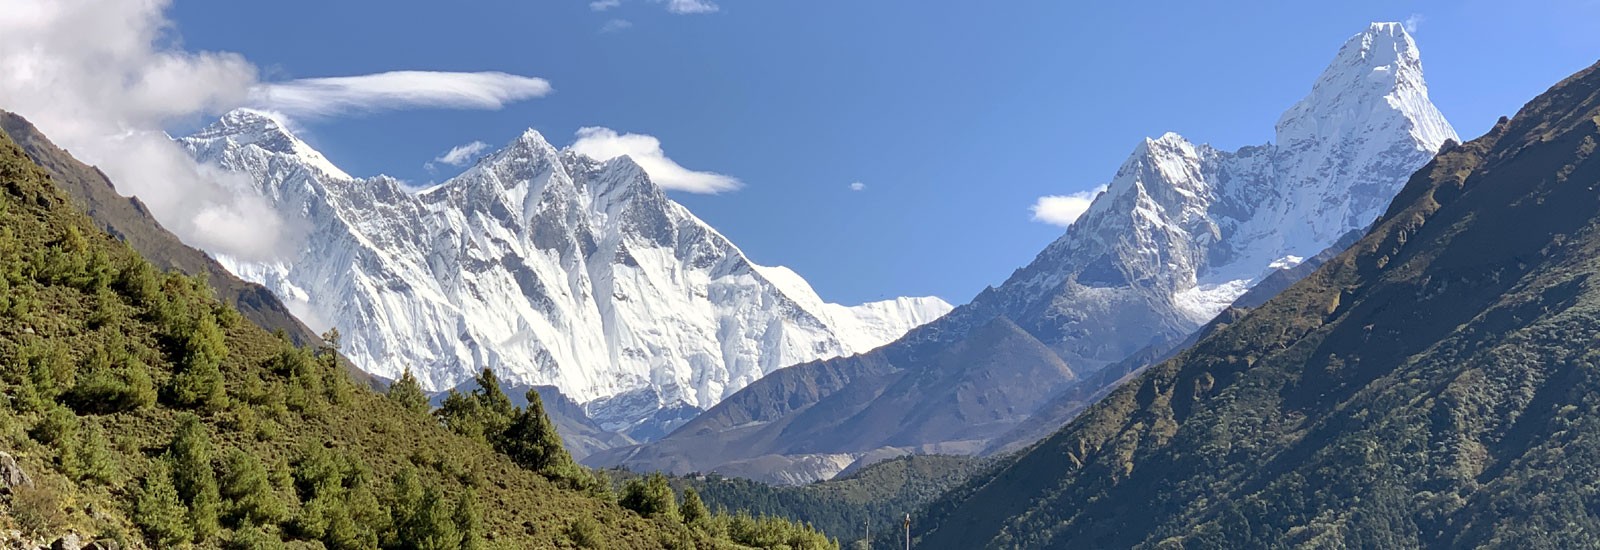 Mt. Everest Range From Kyangjoma